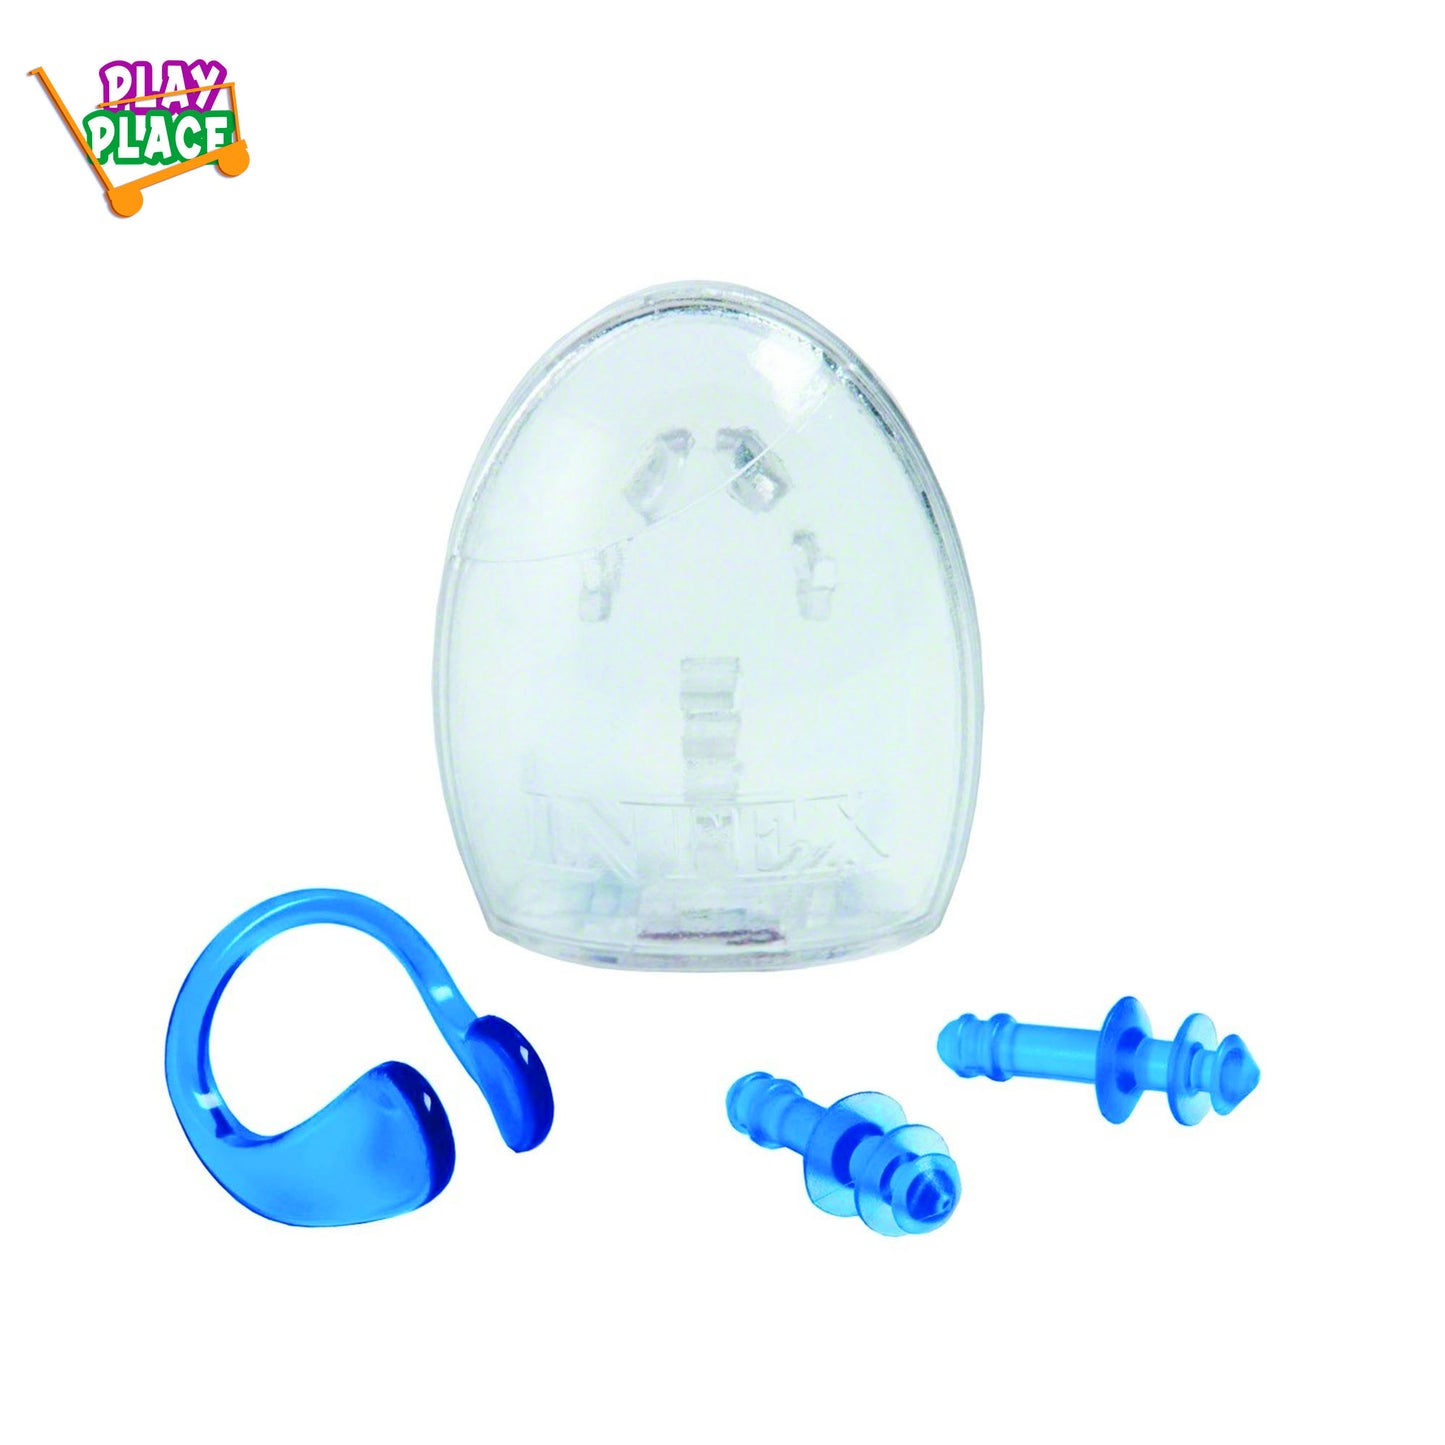 Intex Ear Plugs and Nose Clip Combo Set